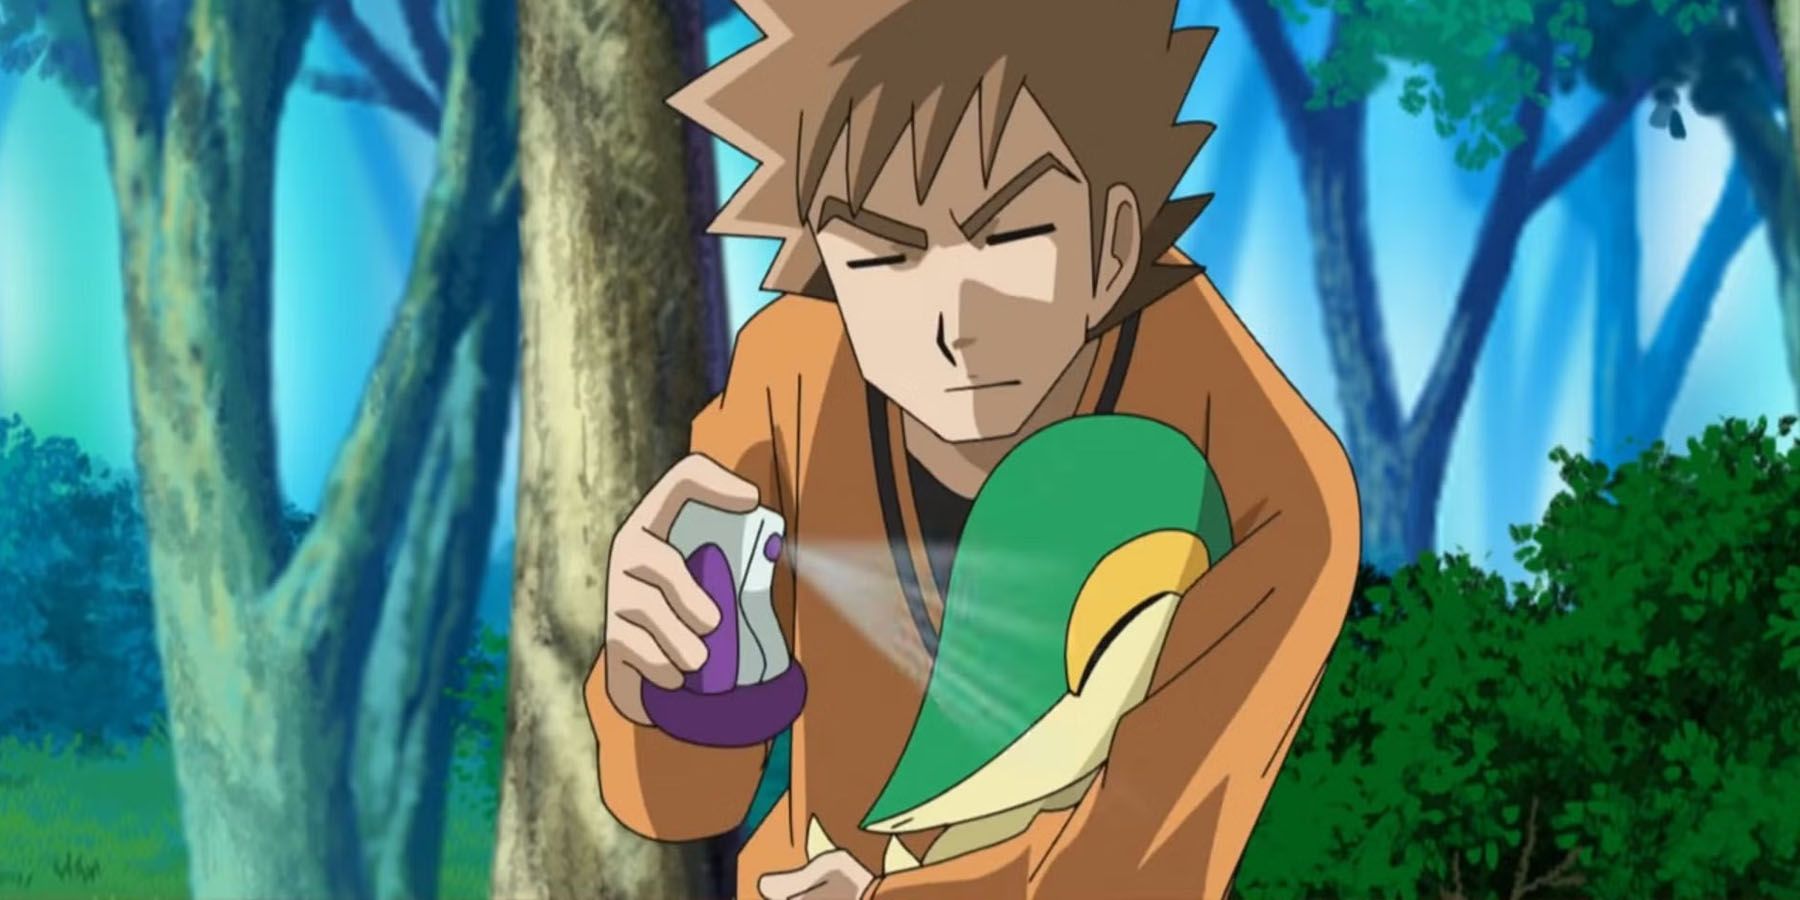 A screenshot of Brock using a Potion in Pokemon Origins.